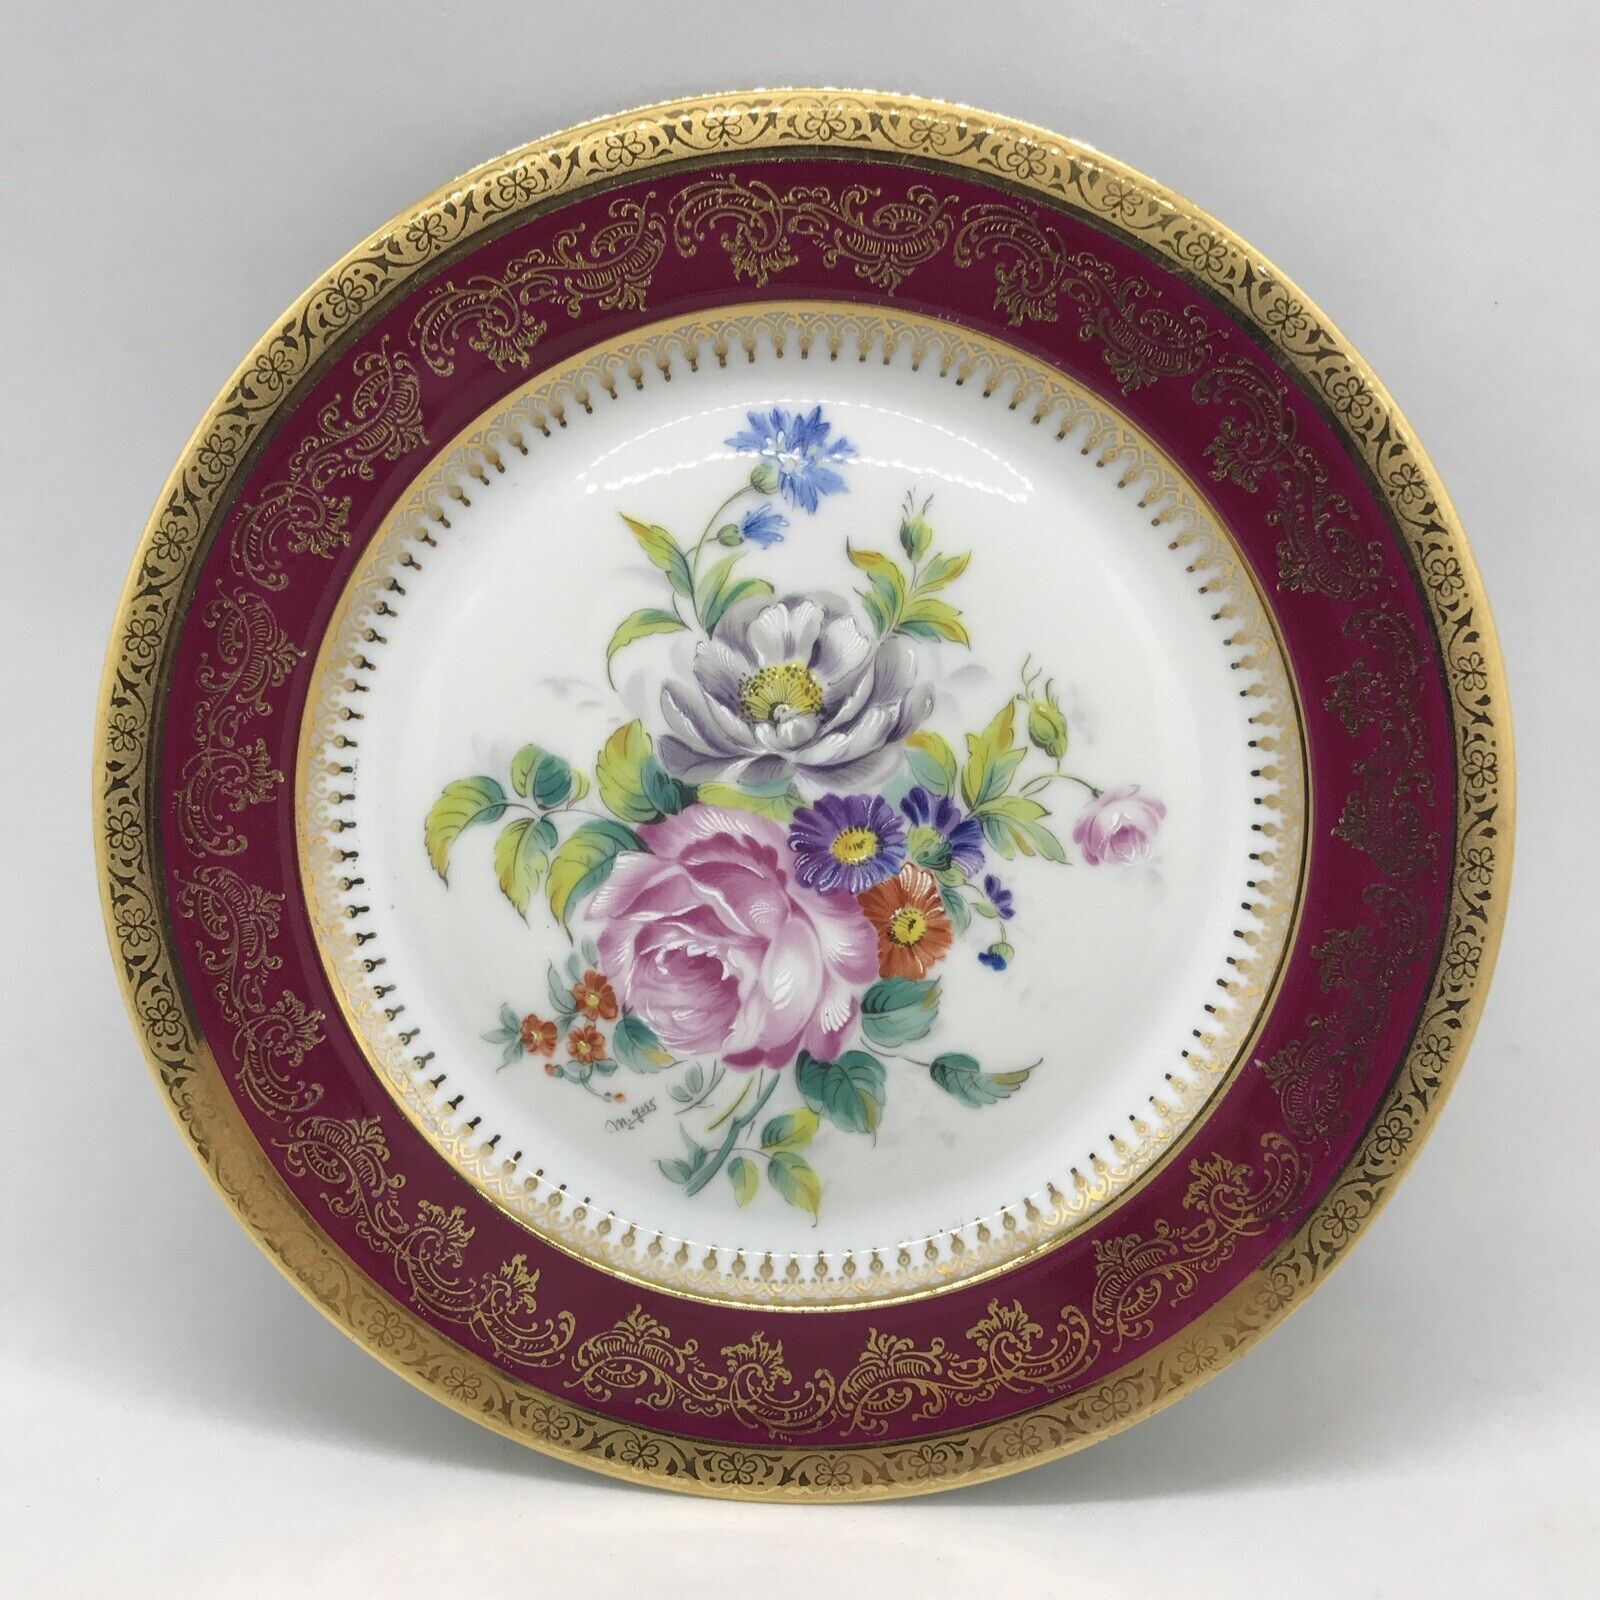 FAB Vintage Lazeyras Limoges France Handpainted Floral Plate Signed M.Yoss 7.5”D